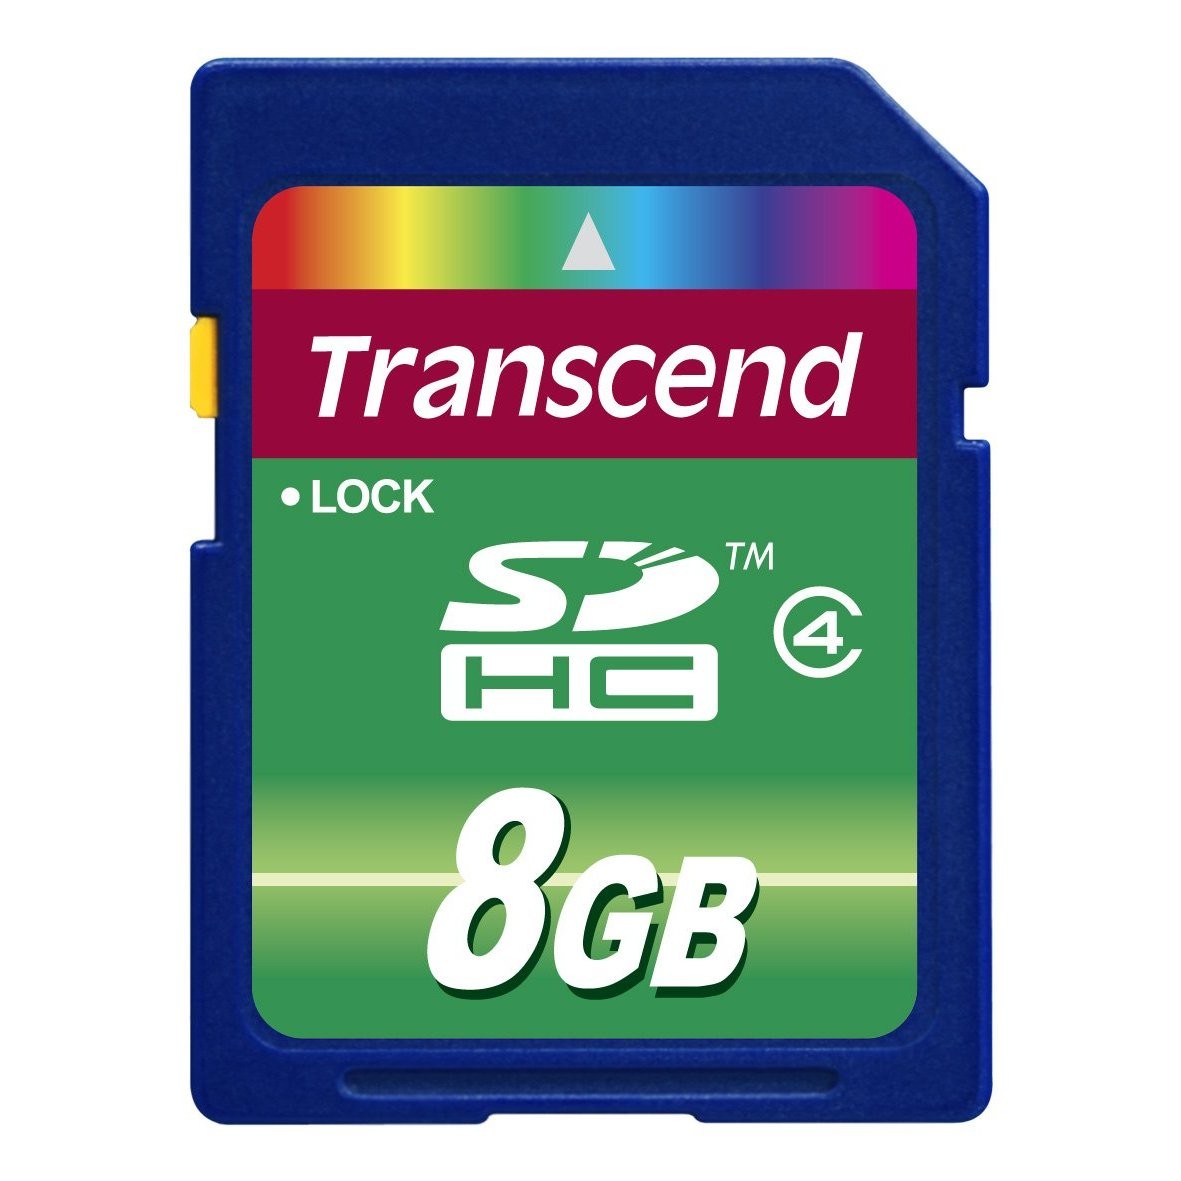 Pentax K-50 Digital Camera Memory Card 8GB (SDHC) Secure Digital High Capacity Class 4 Flash Card - image 1 of 2